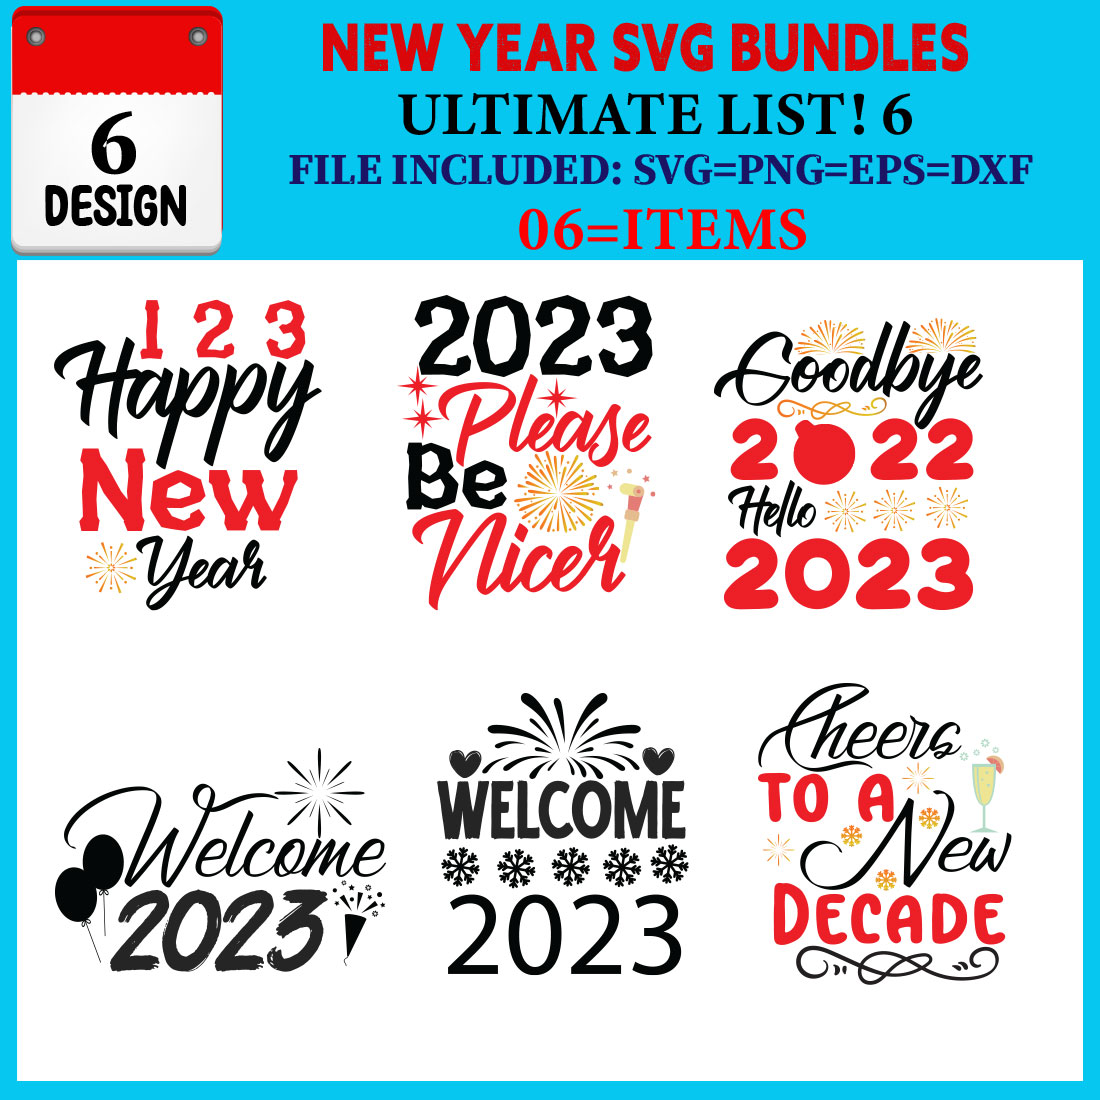 New Year T-shirt Design Bundle Vol-04 cover image.